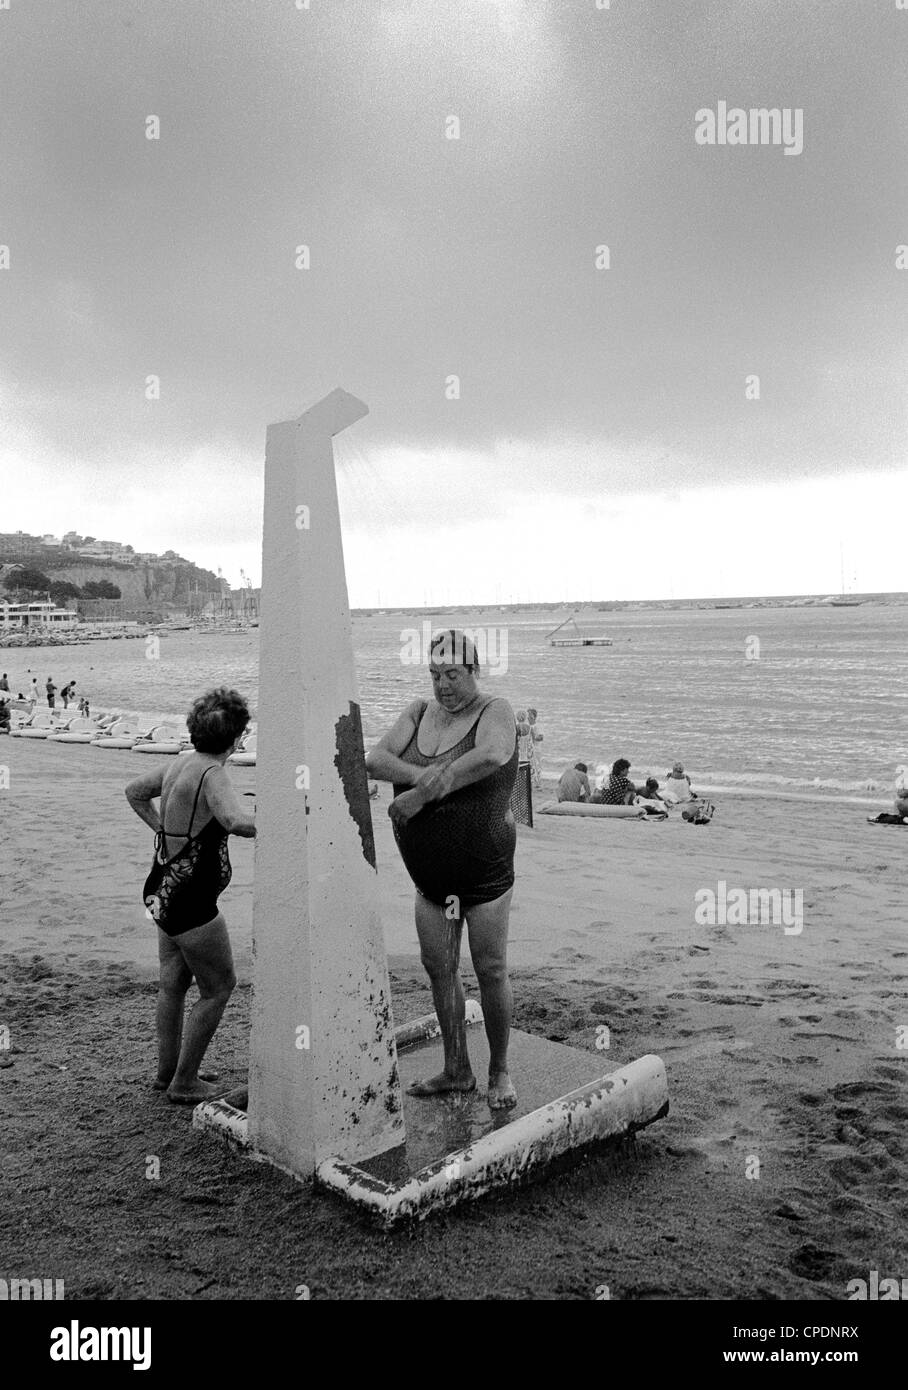 Showering on the beach Stock Photo - Alamy